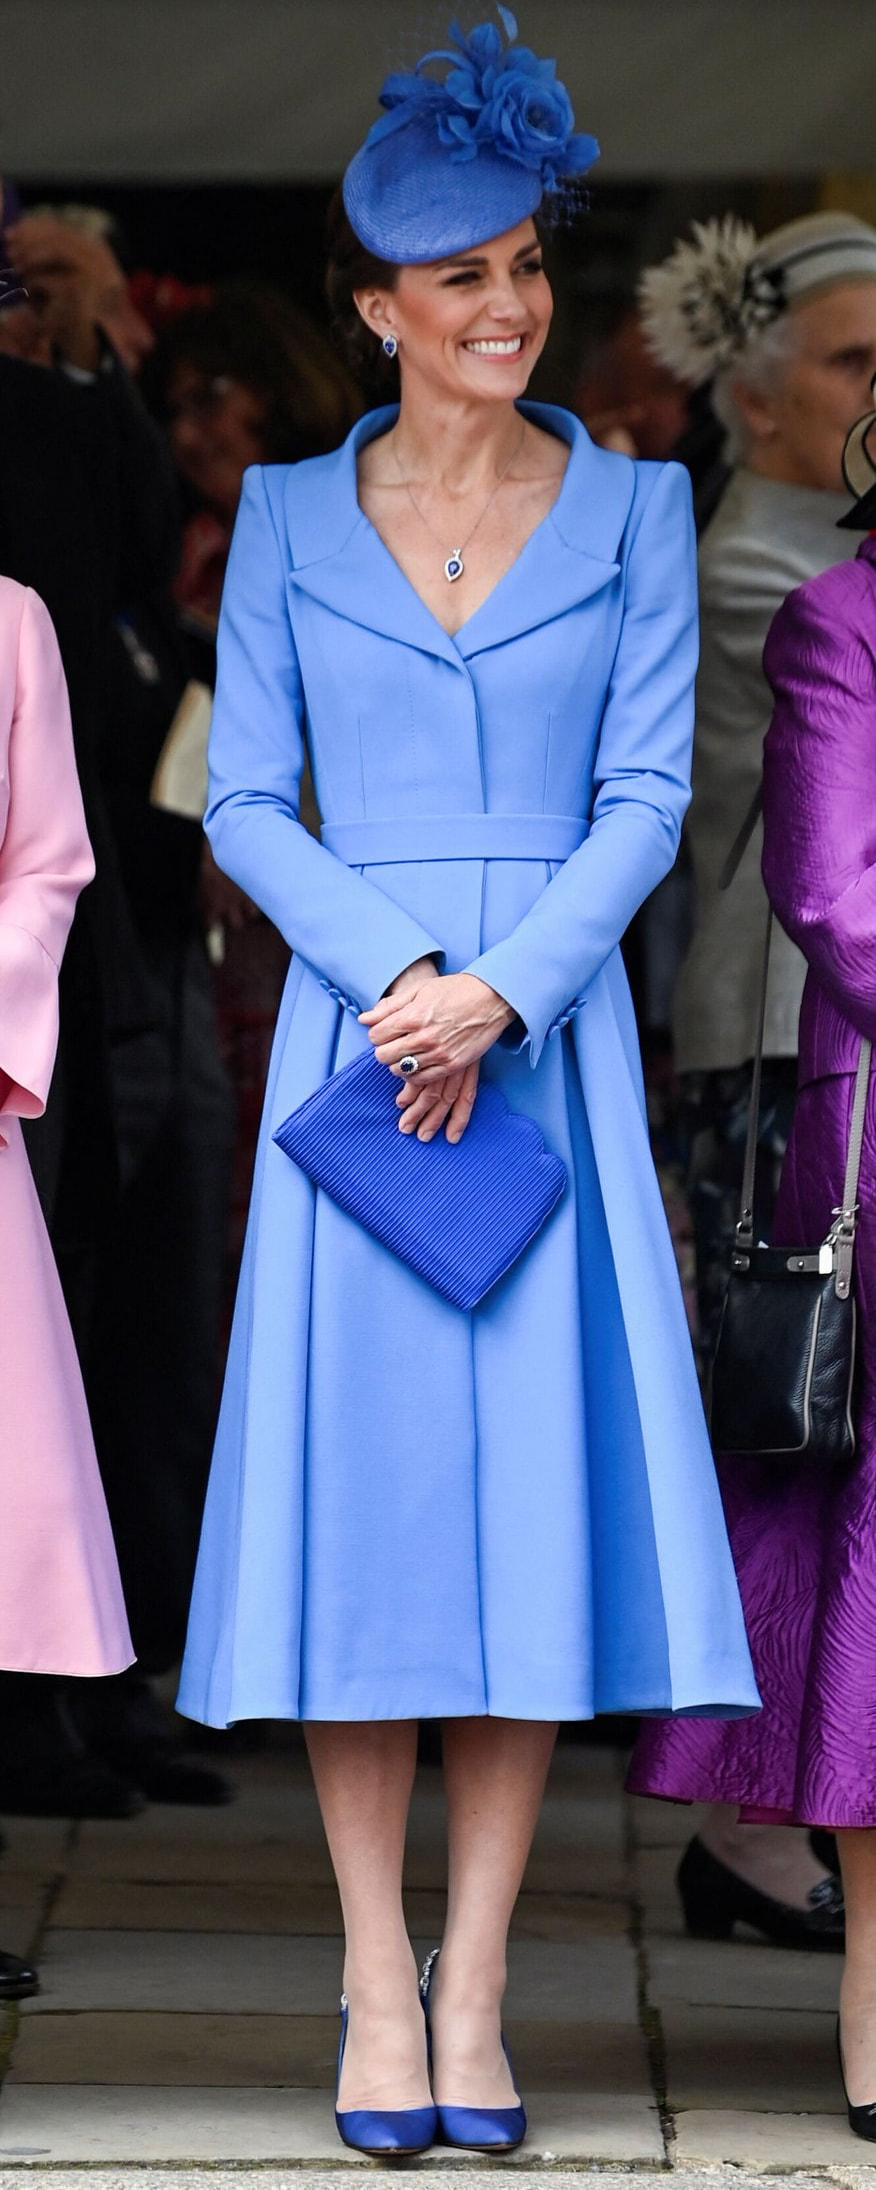 Aquazzura Love Link 105 Sling in Blueberry Grosgrain as seen on Kate Middleton, The Duchess of Cambridge.